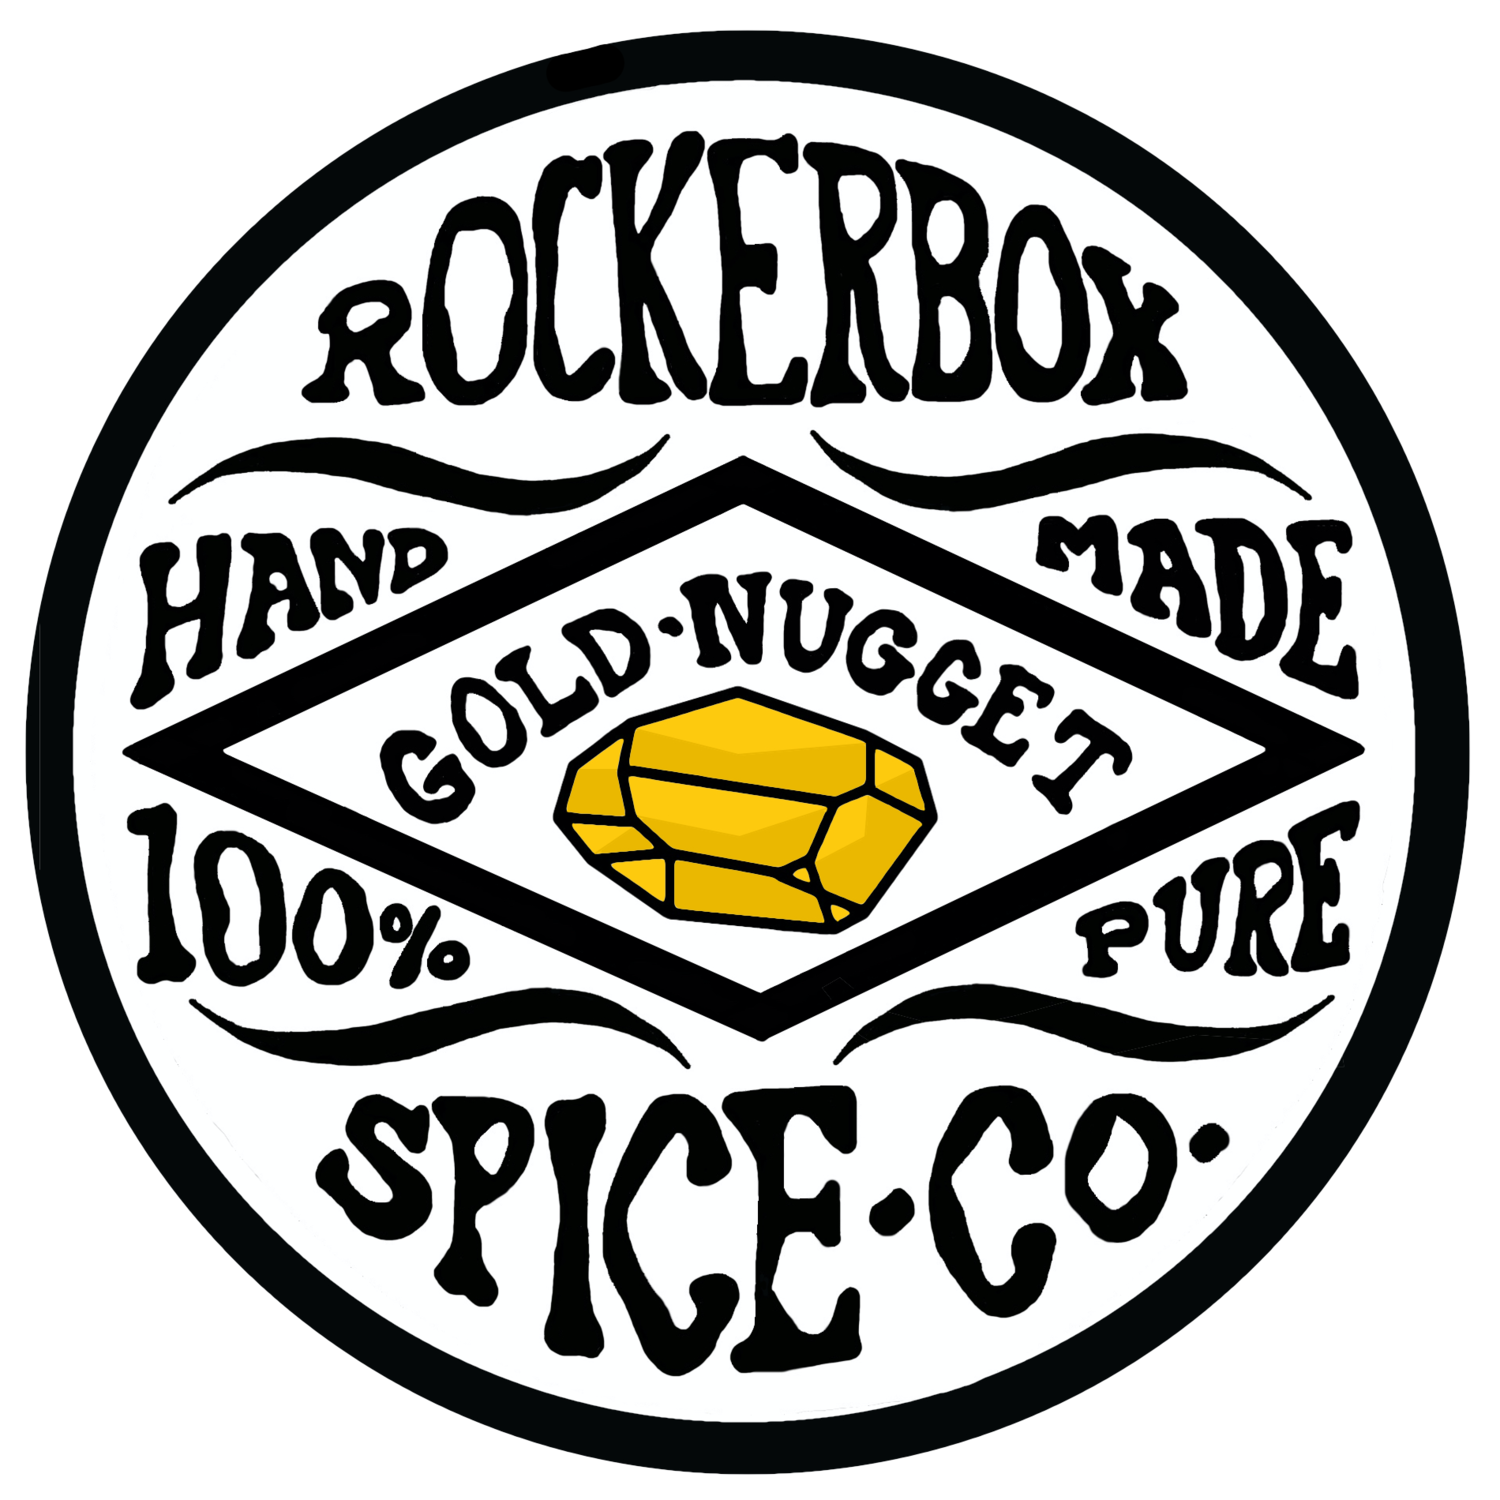 Rockerbox Spice Co.